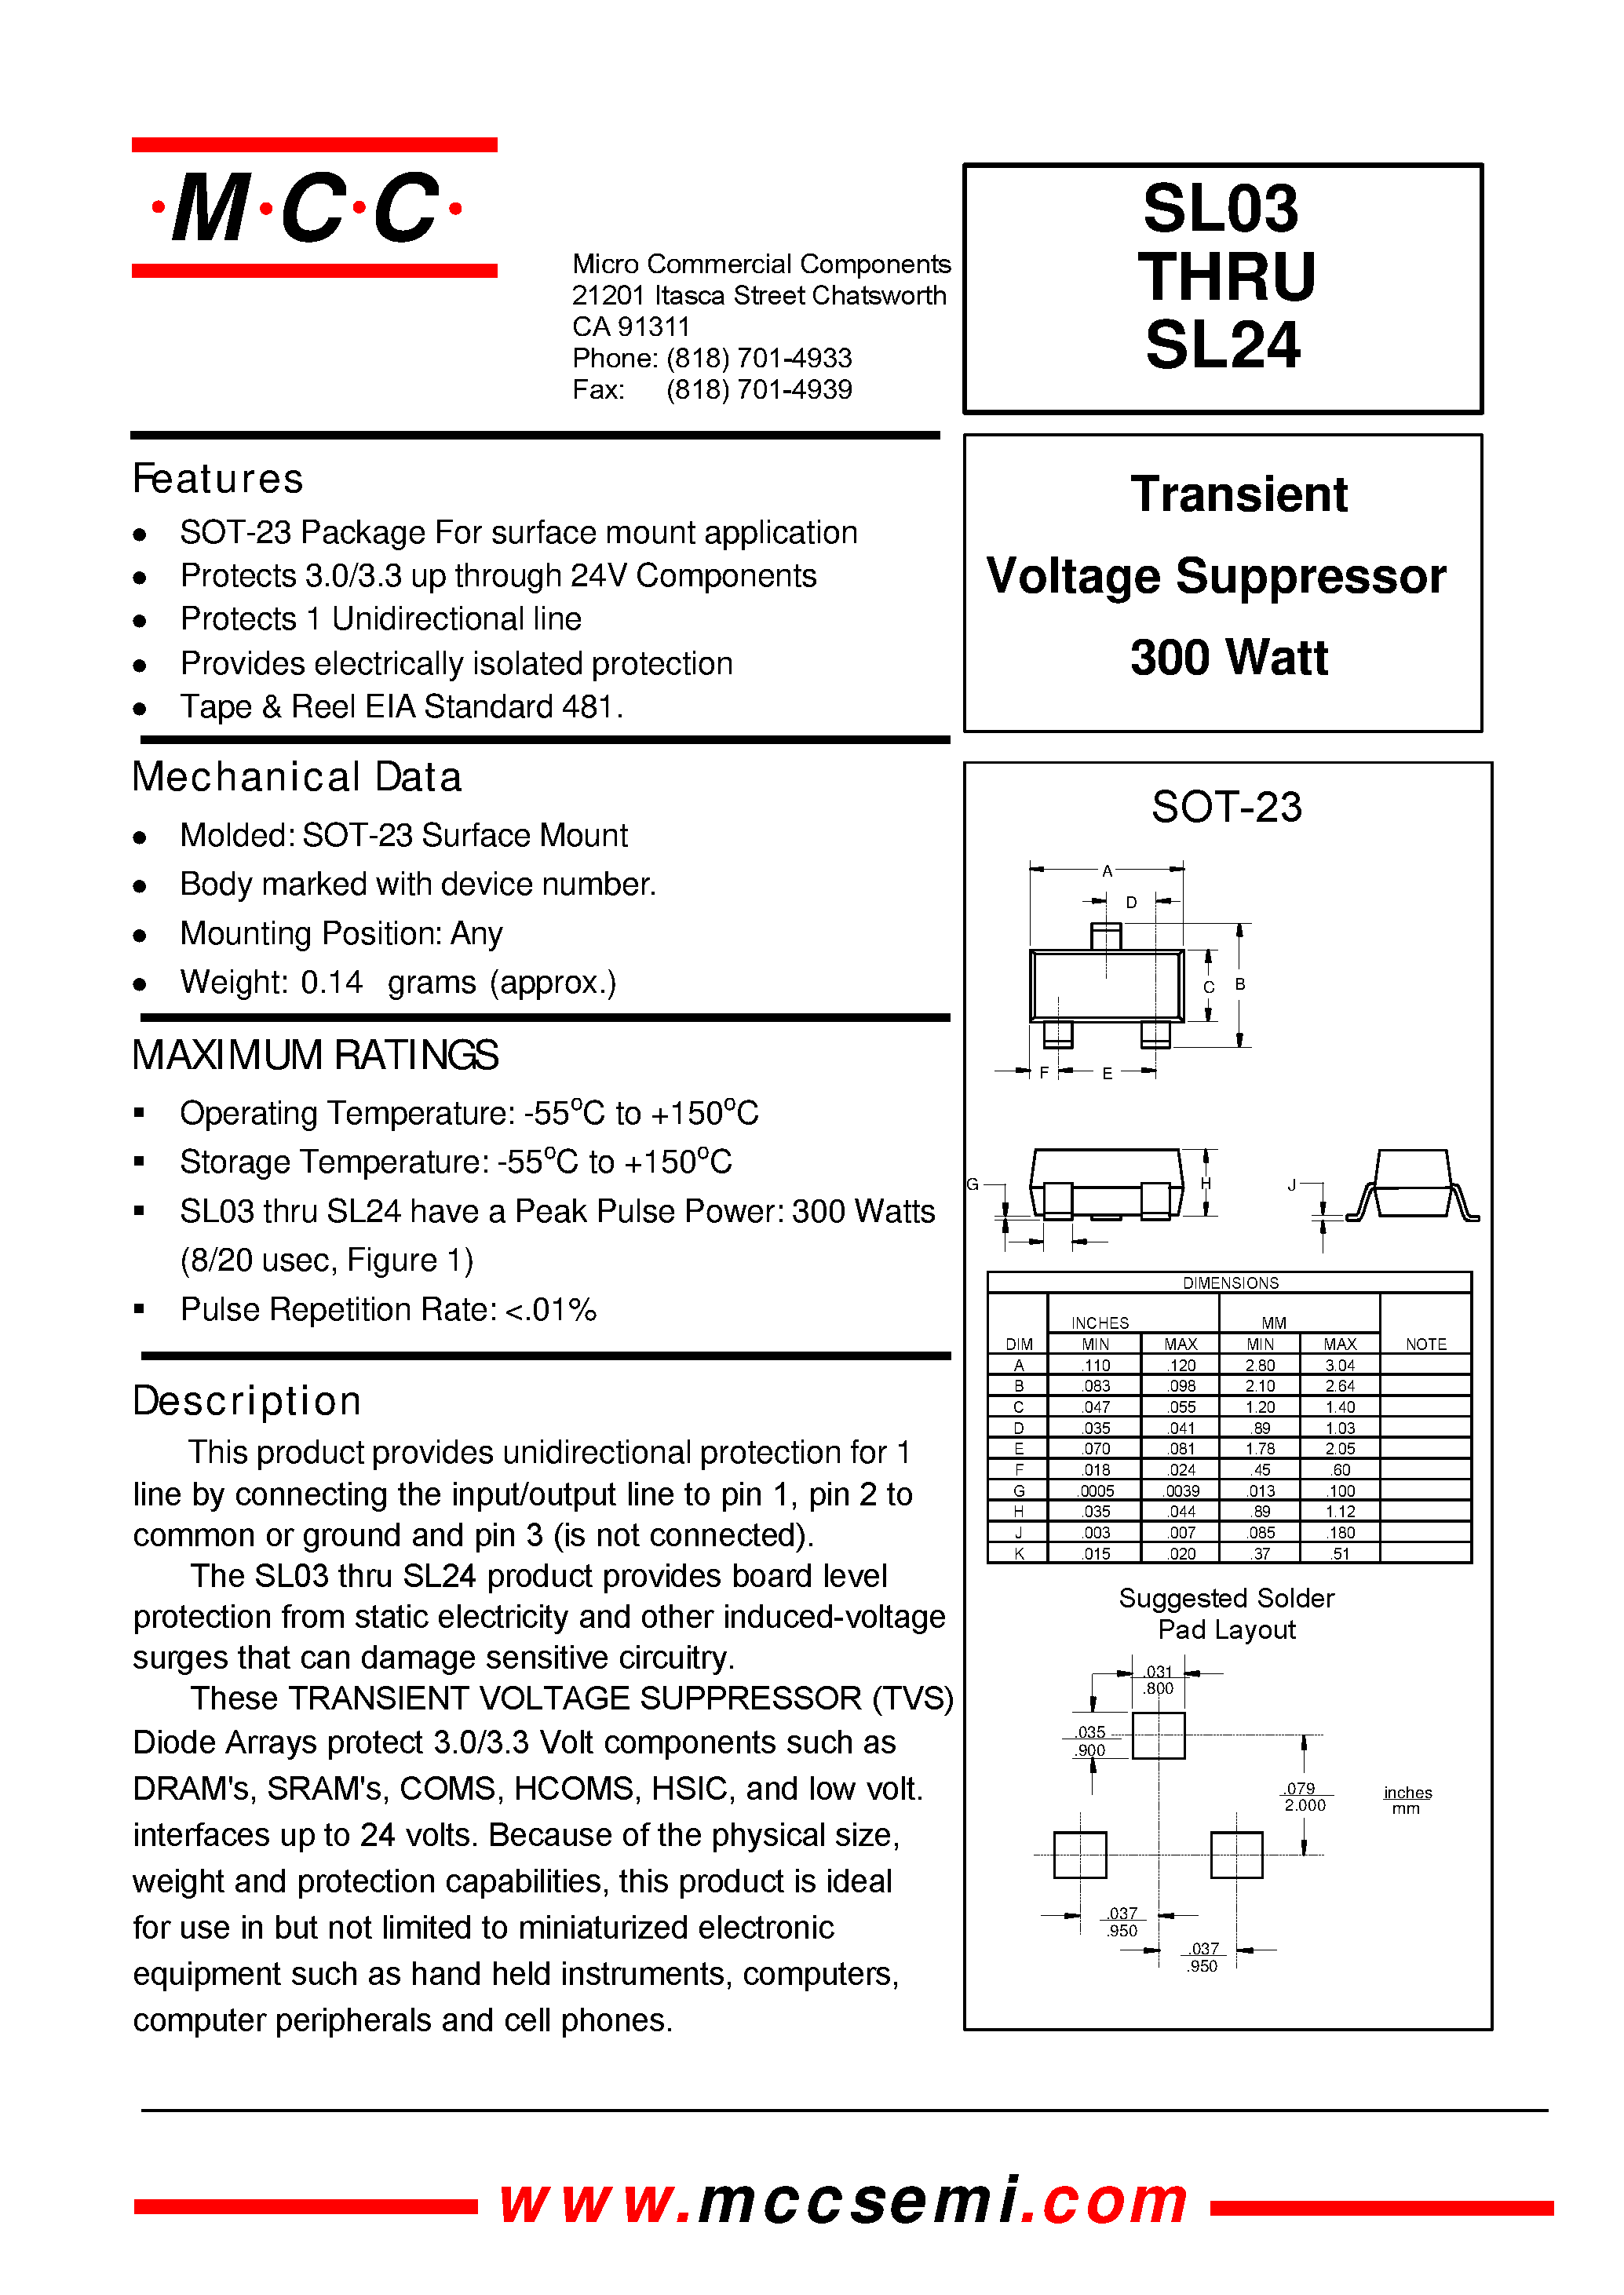 Даташит SL15 - Transient Voltage Suppressor 300 Watt страница 1